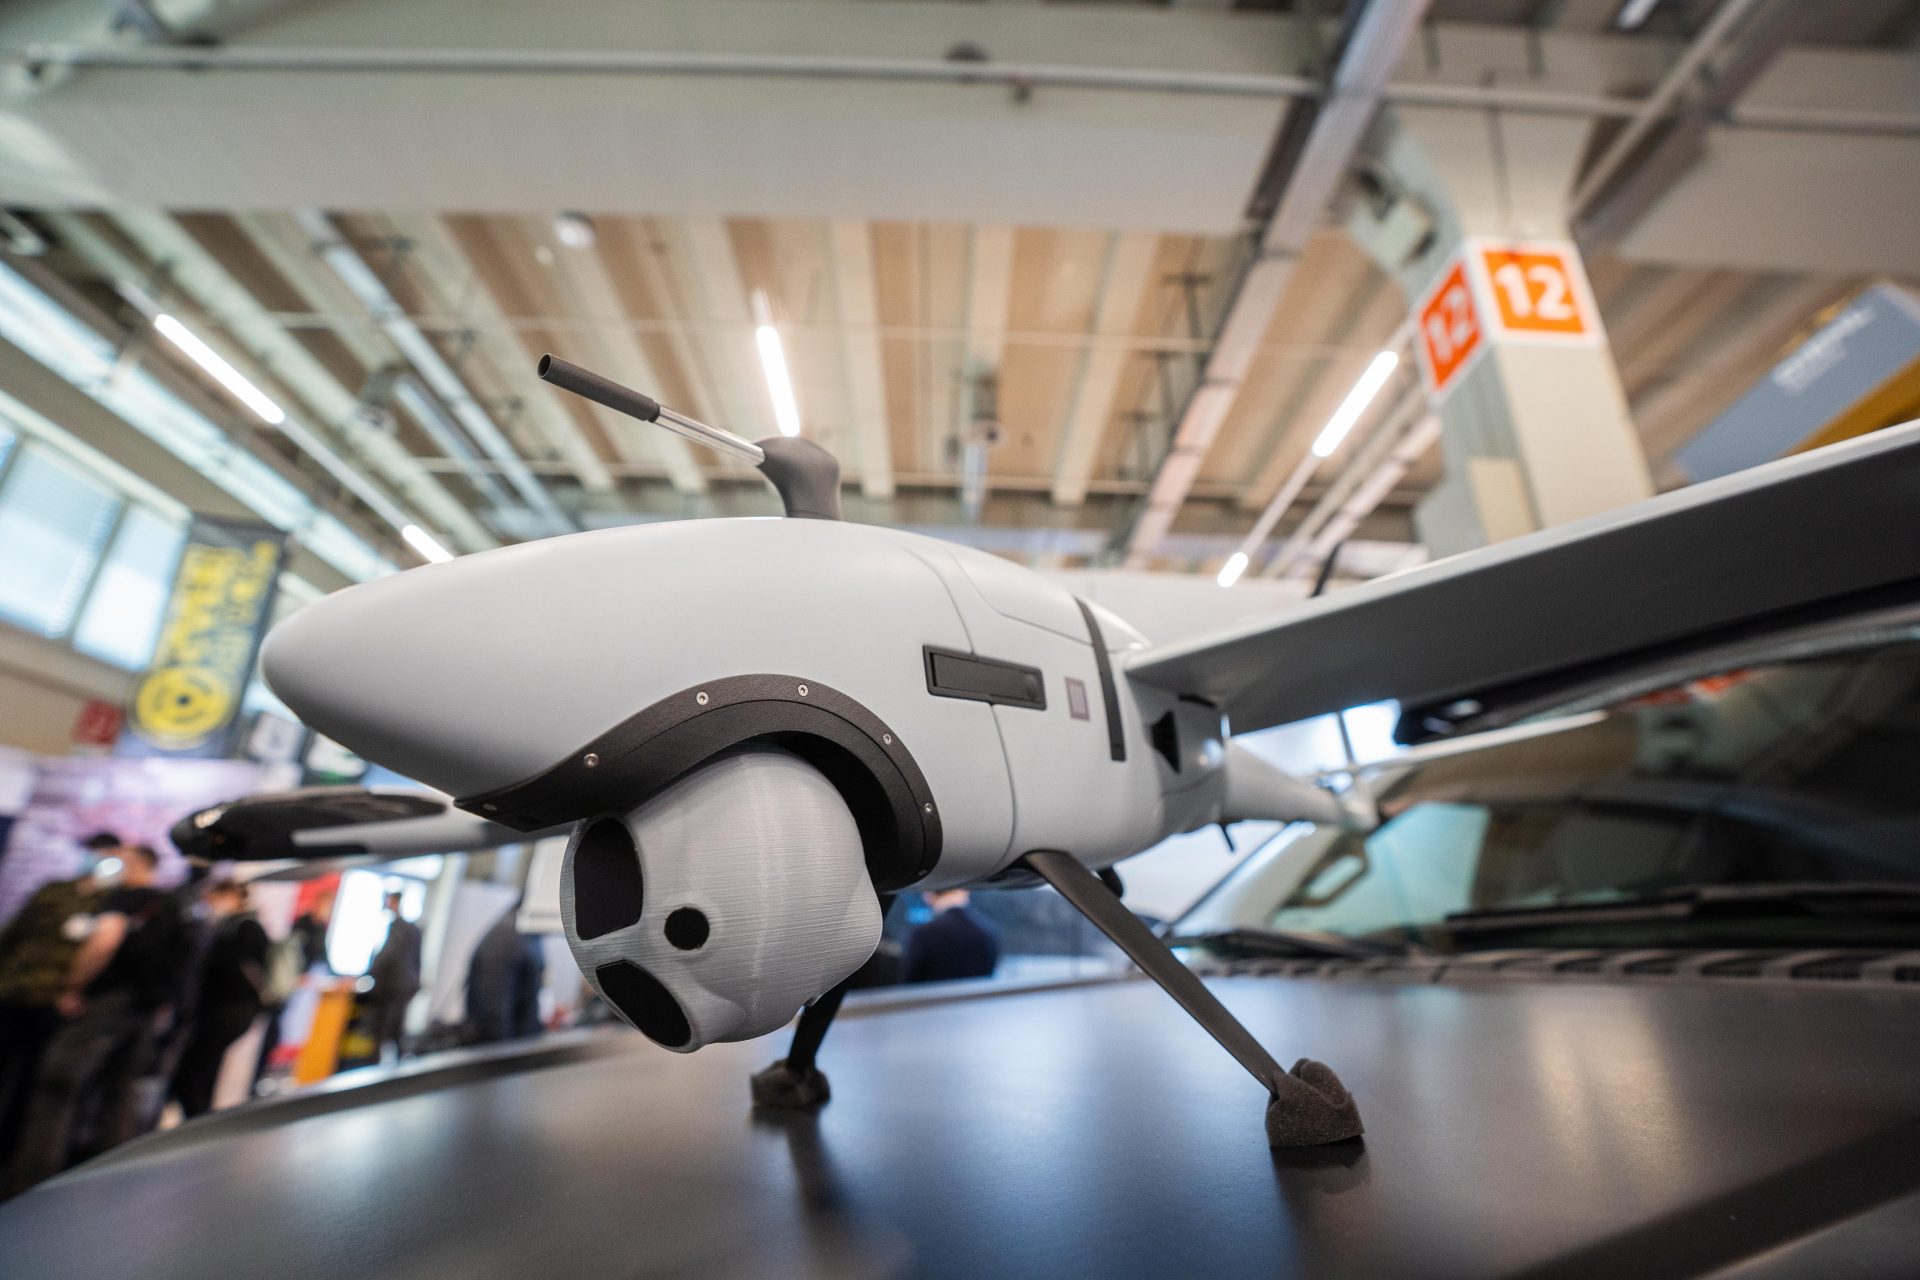 A powerful reconnaissance drone 